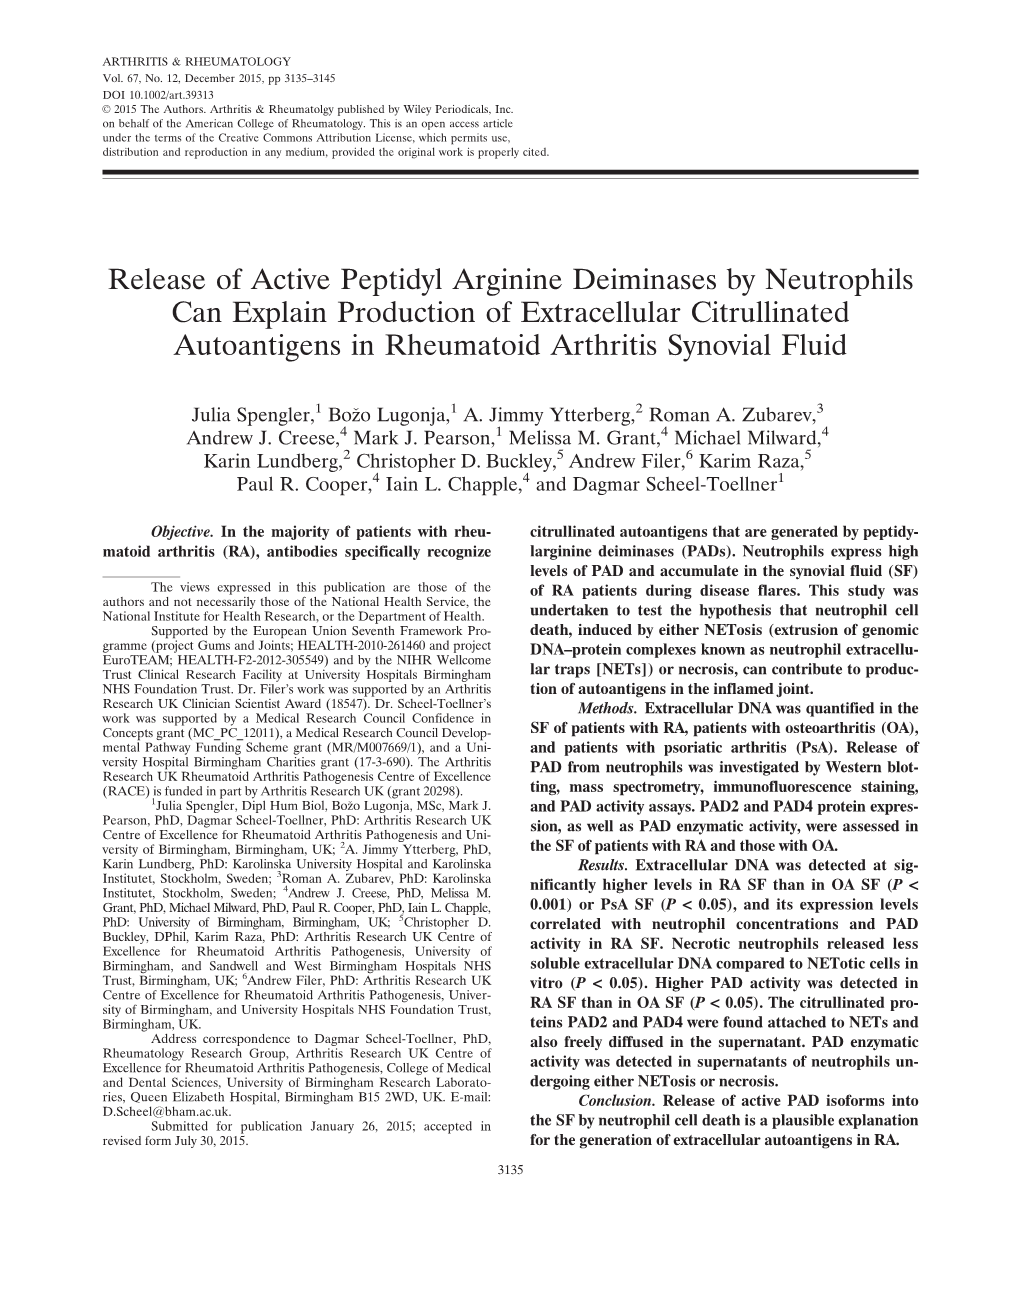 Release of Active Peptidyl Arginine Deiminases by Neutrophils Can Explain Production of Extracellular Citrullinated Autoantigens